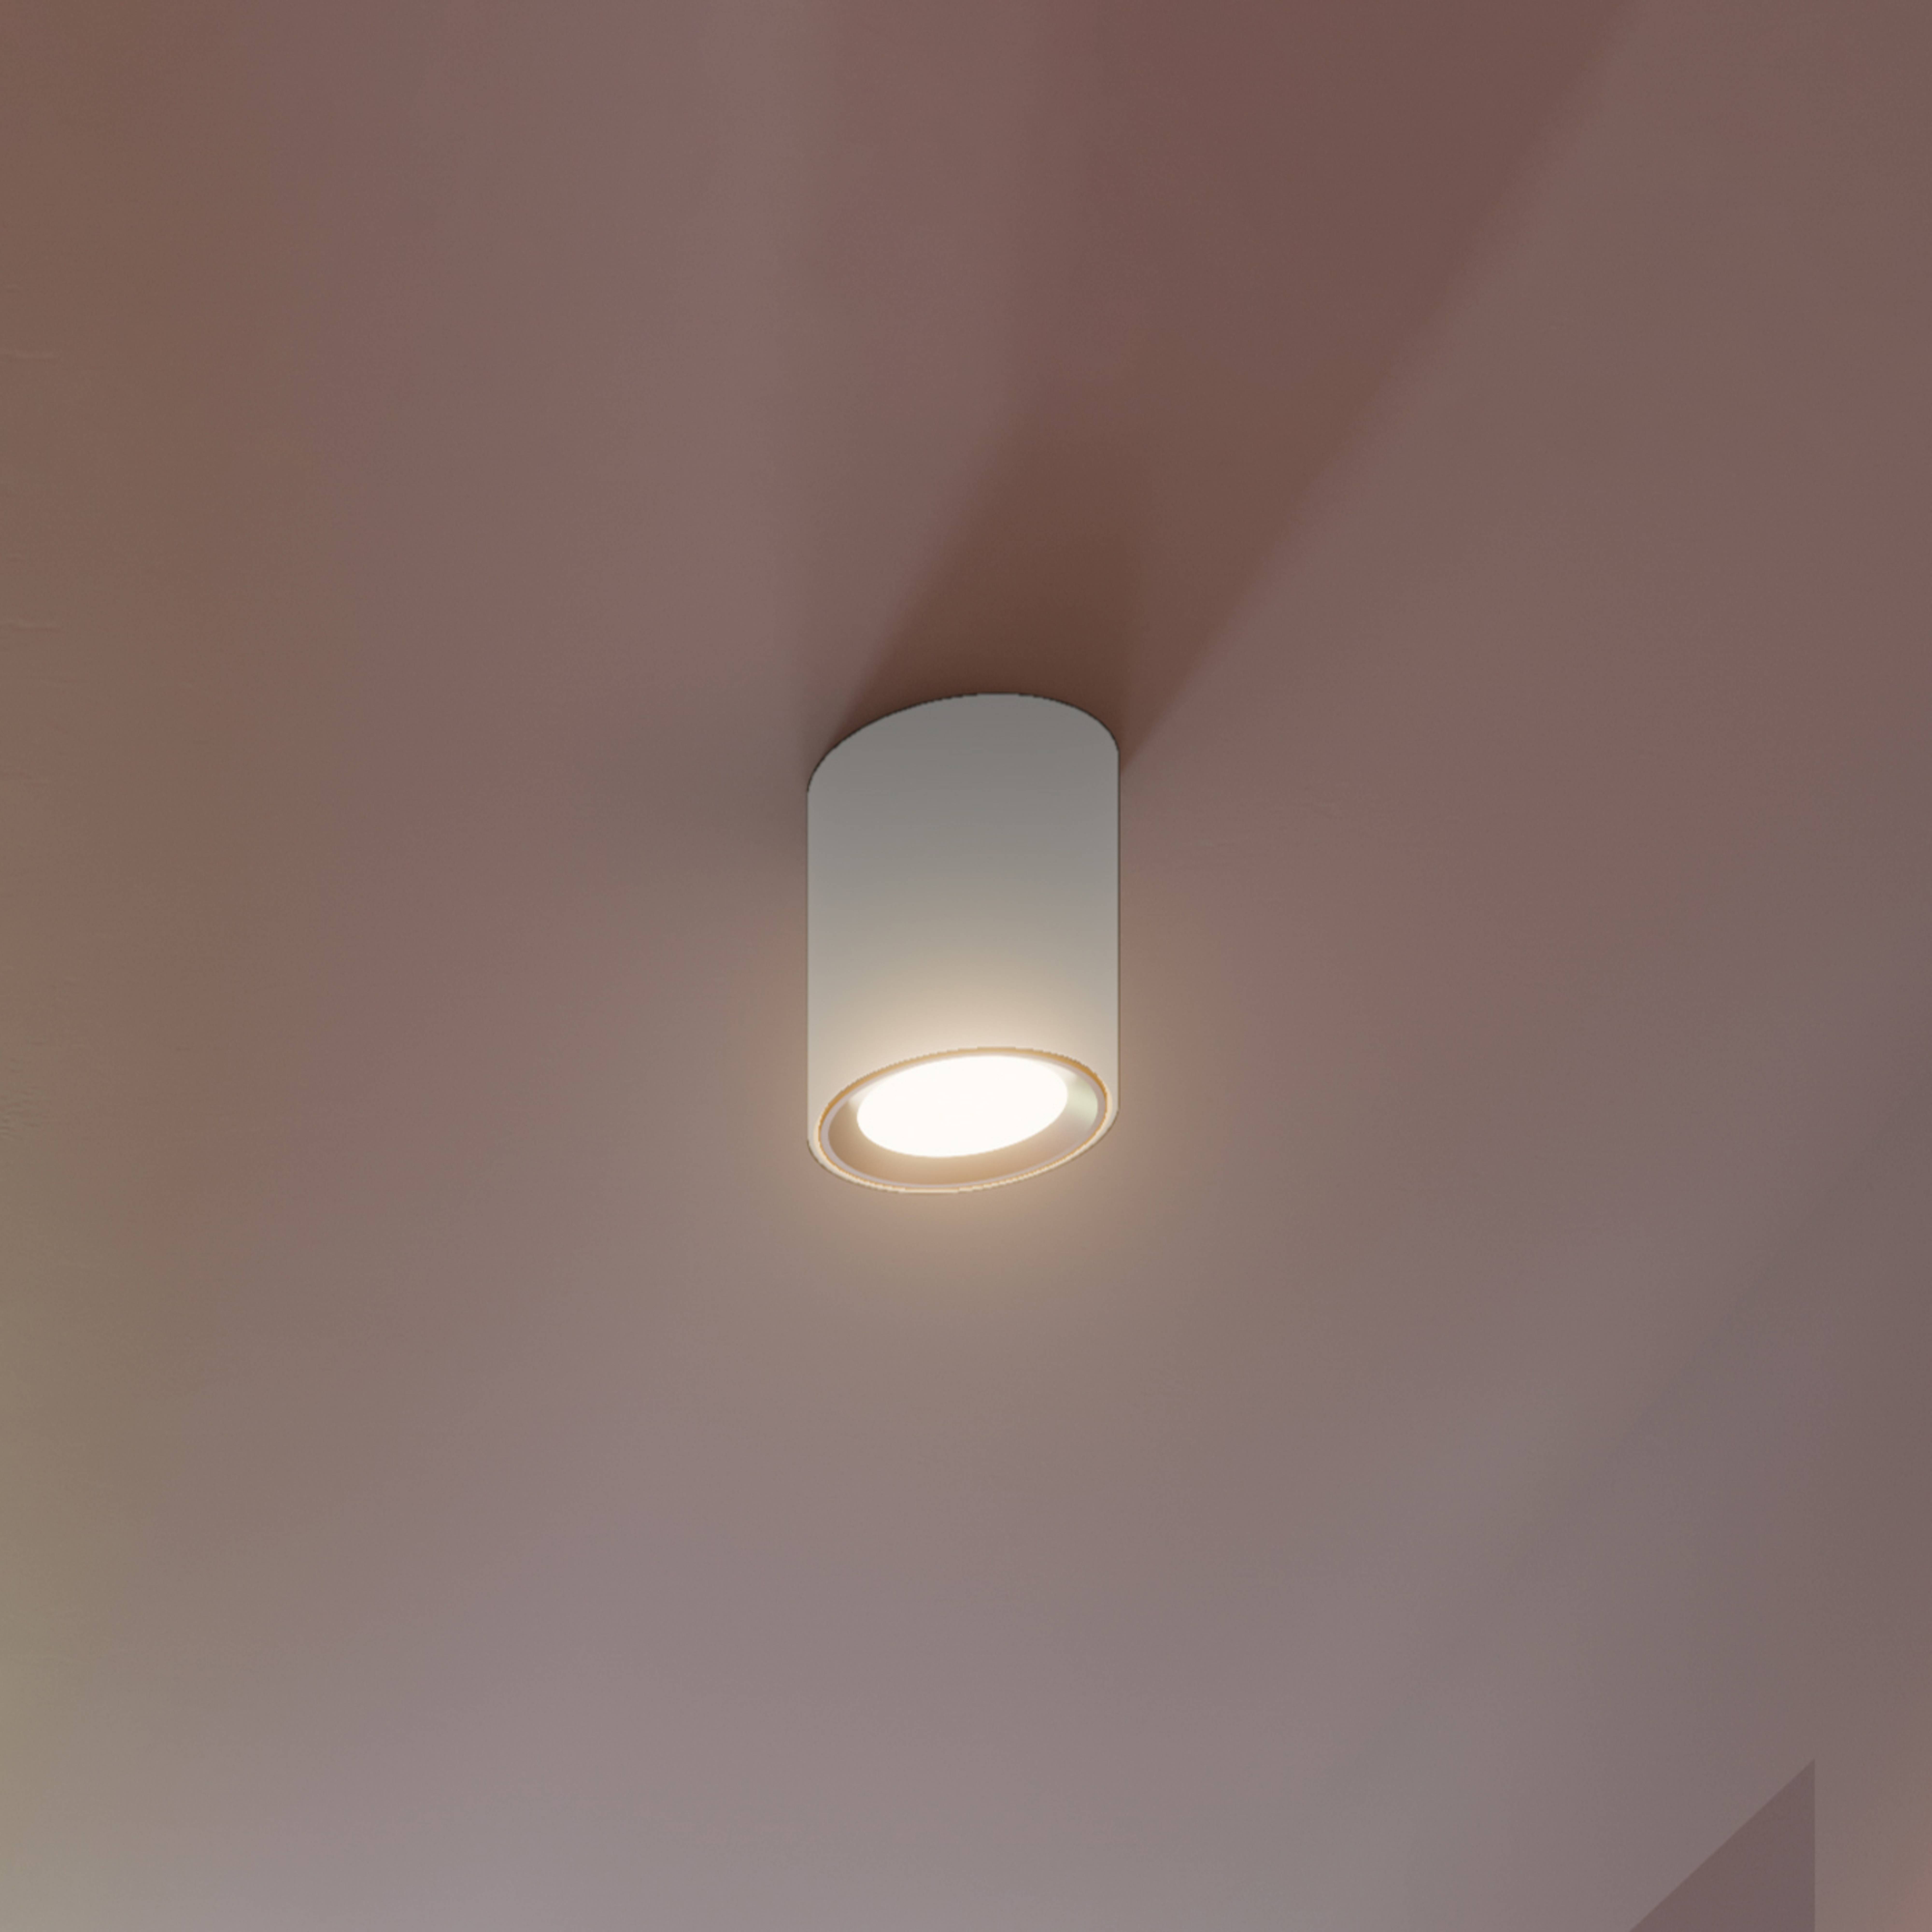 LED downlight de techo Landon Smart, blanco, altura 14 cm